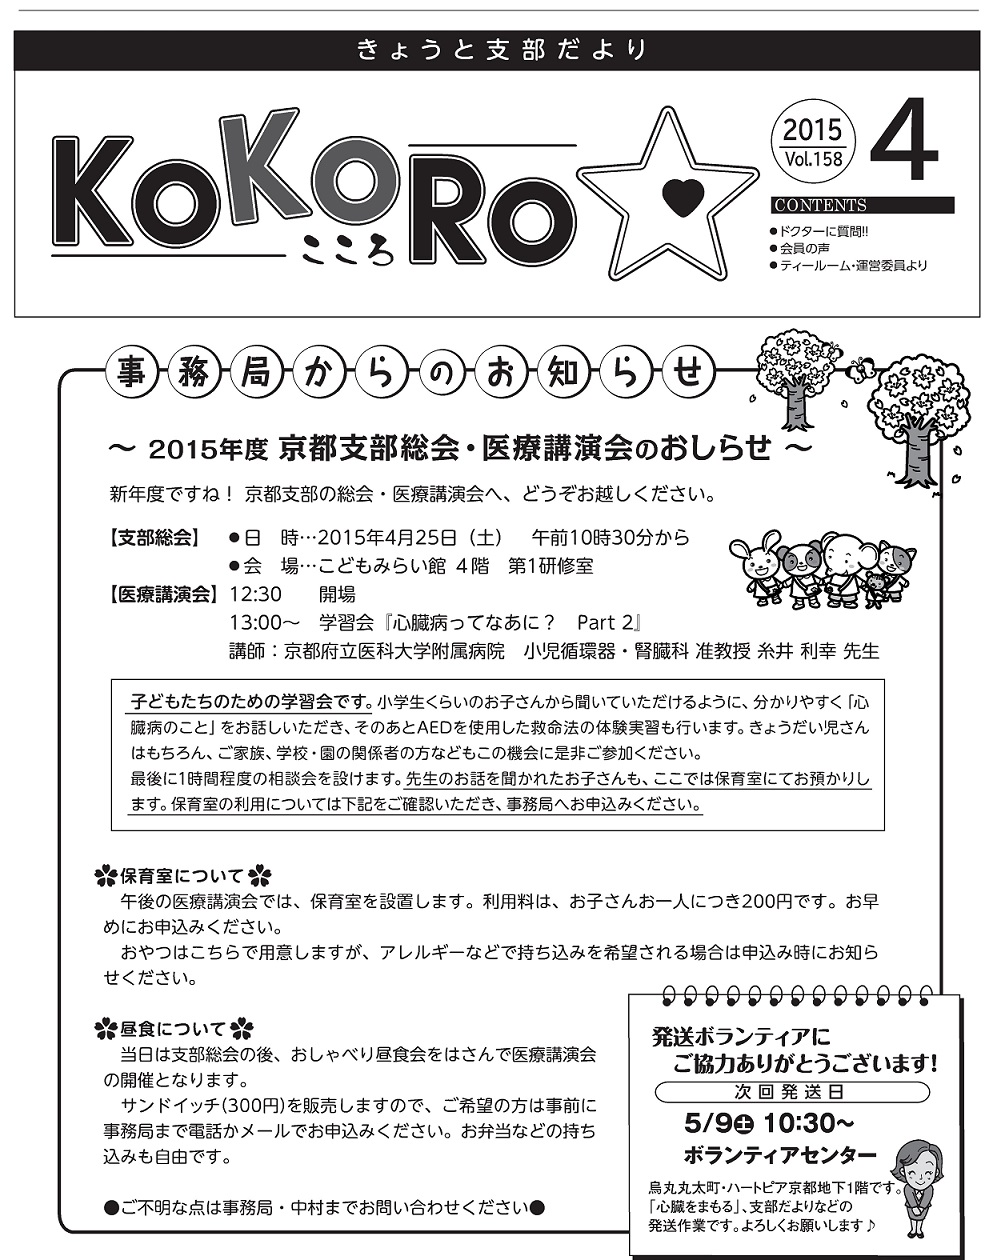 KOKORO4月号(vol.158)